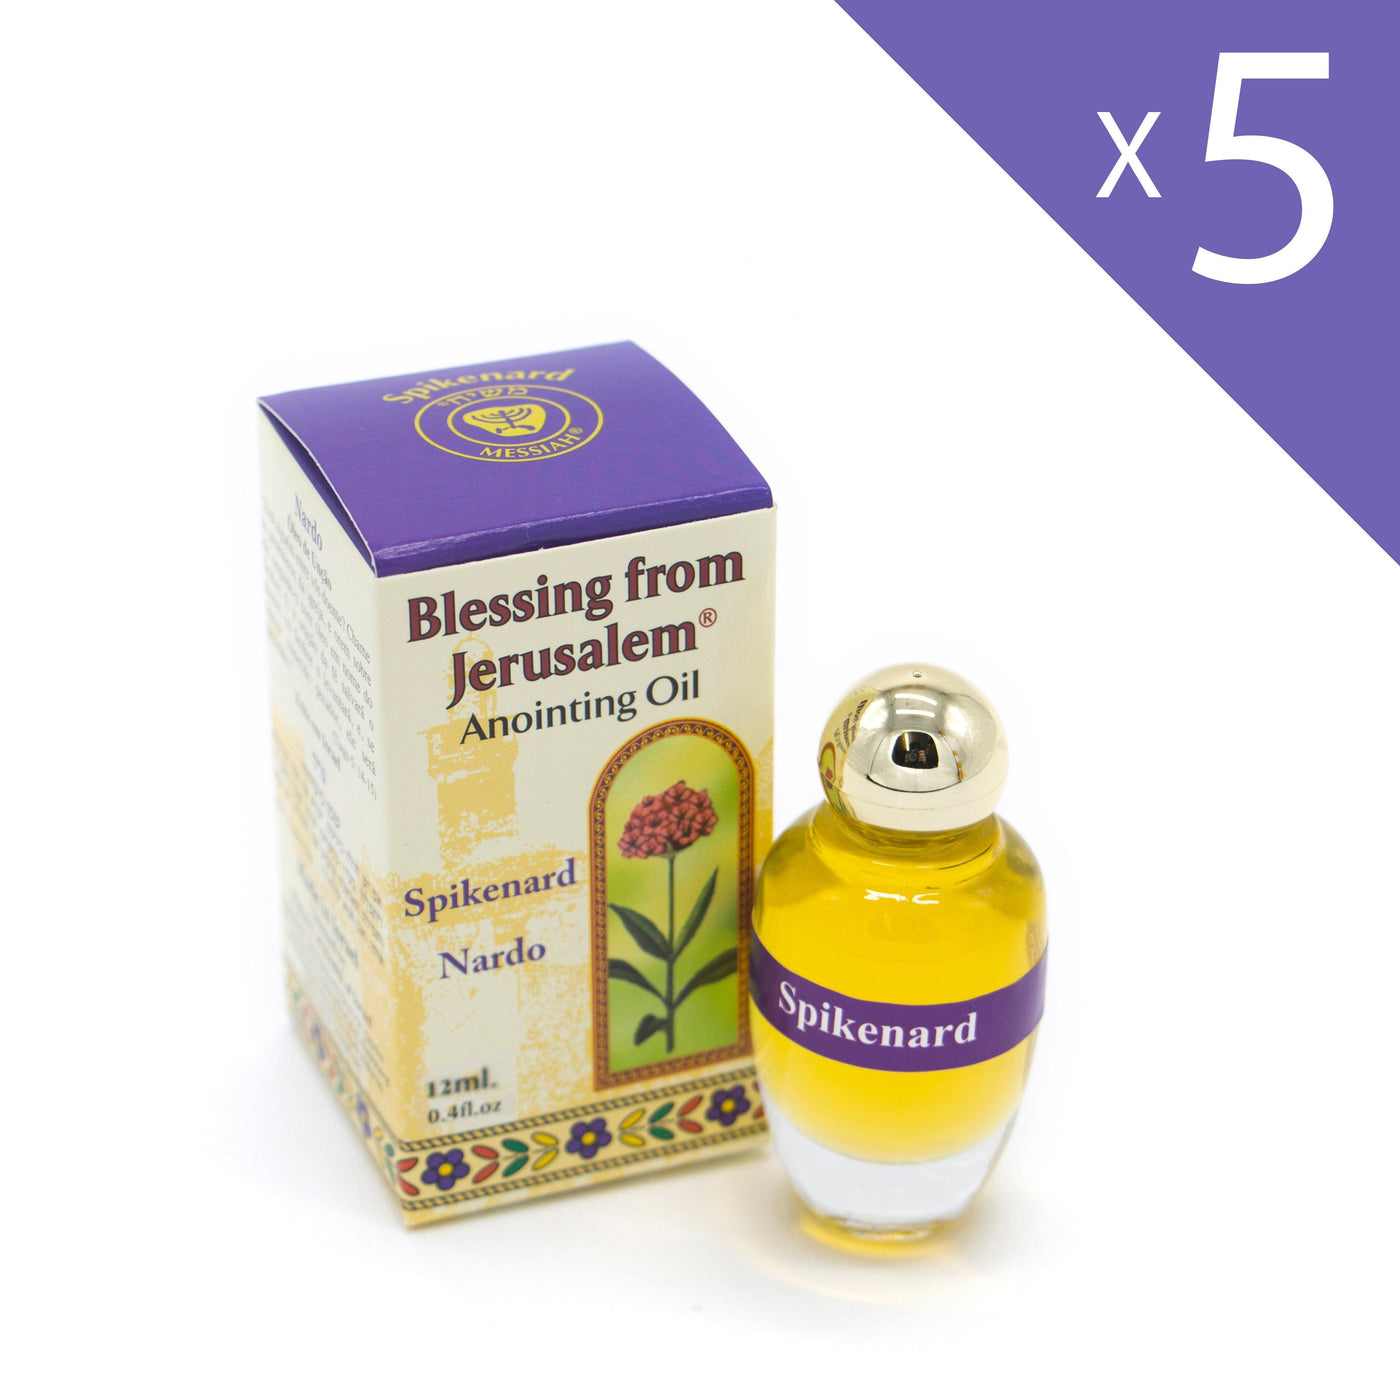 Lot of 5 x Anointing Oil Spikenard 12ml - 0.4oz From Holyland Jerusalem (5 bottels) - Spring Nahal